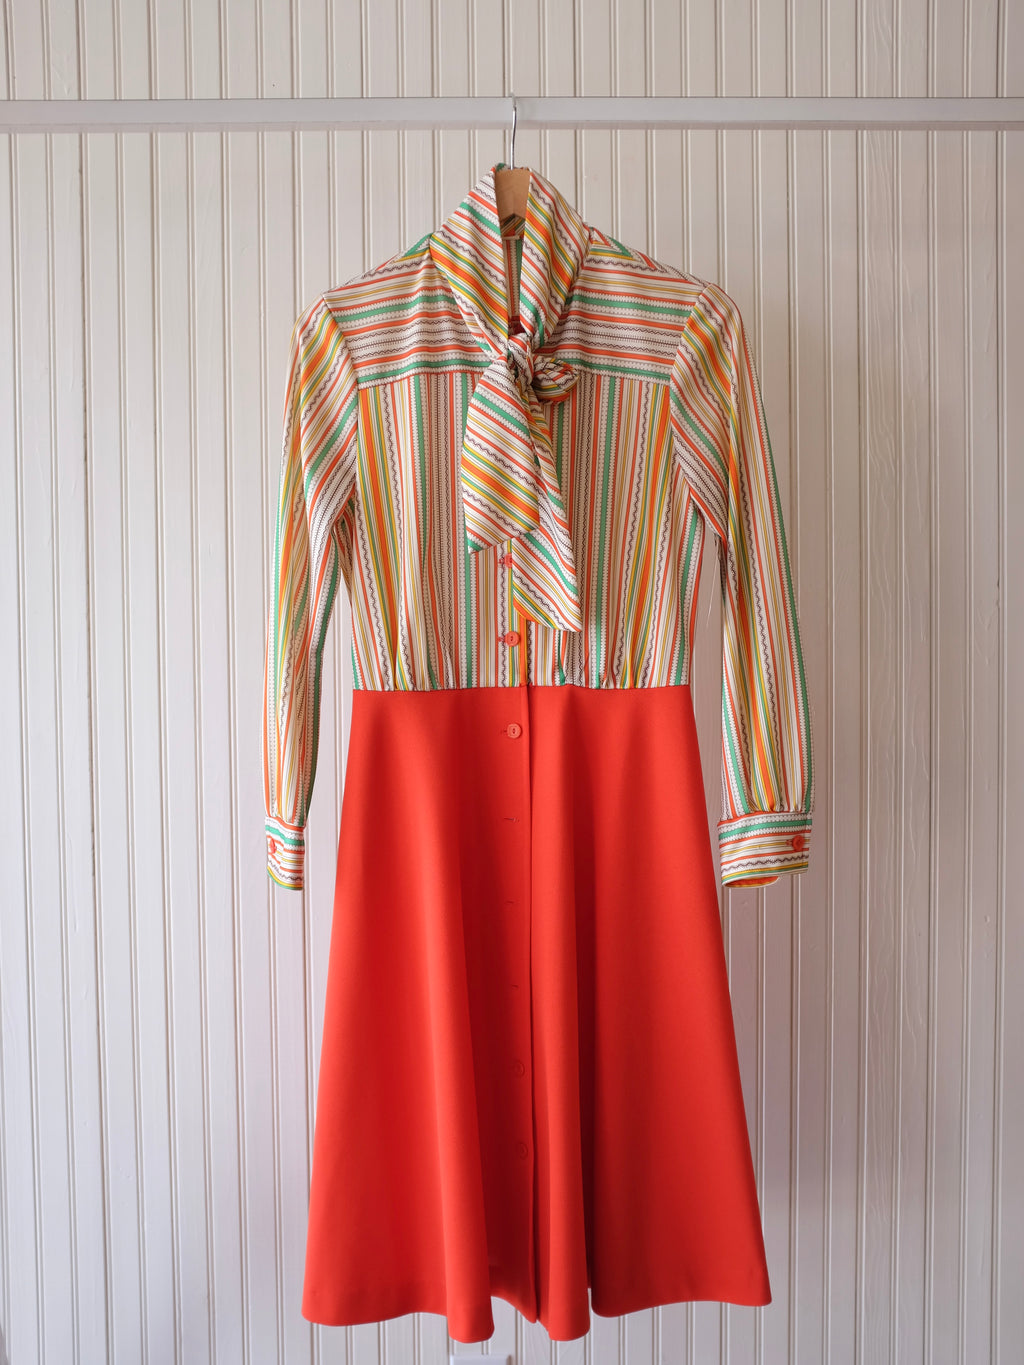 Unbranded 70s Striped Dress - SM